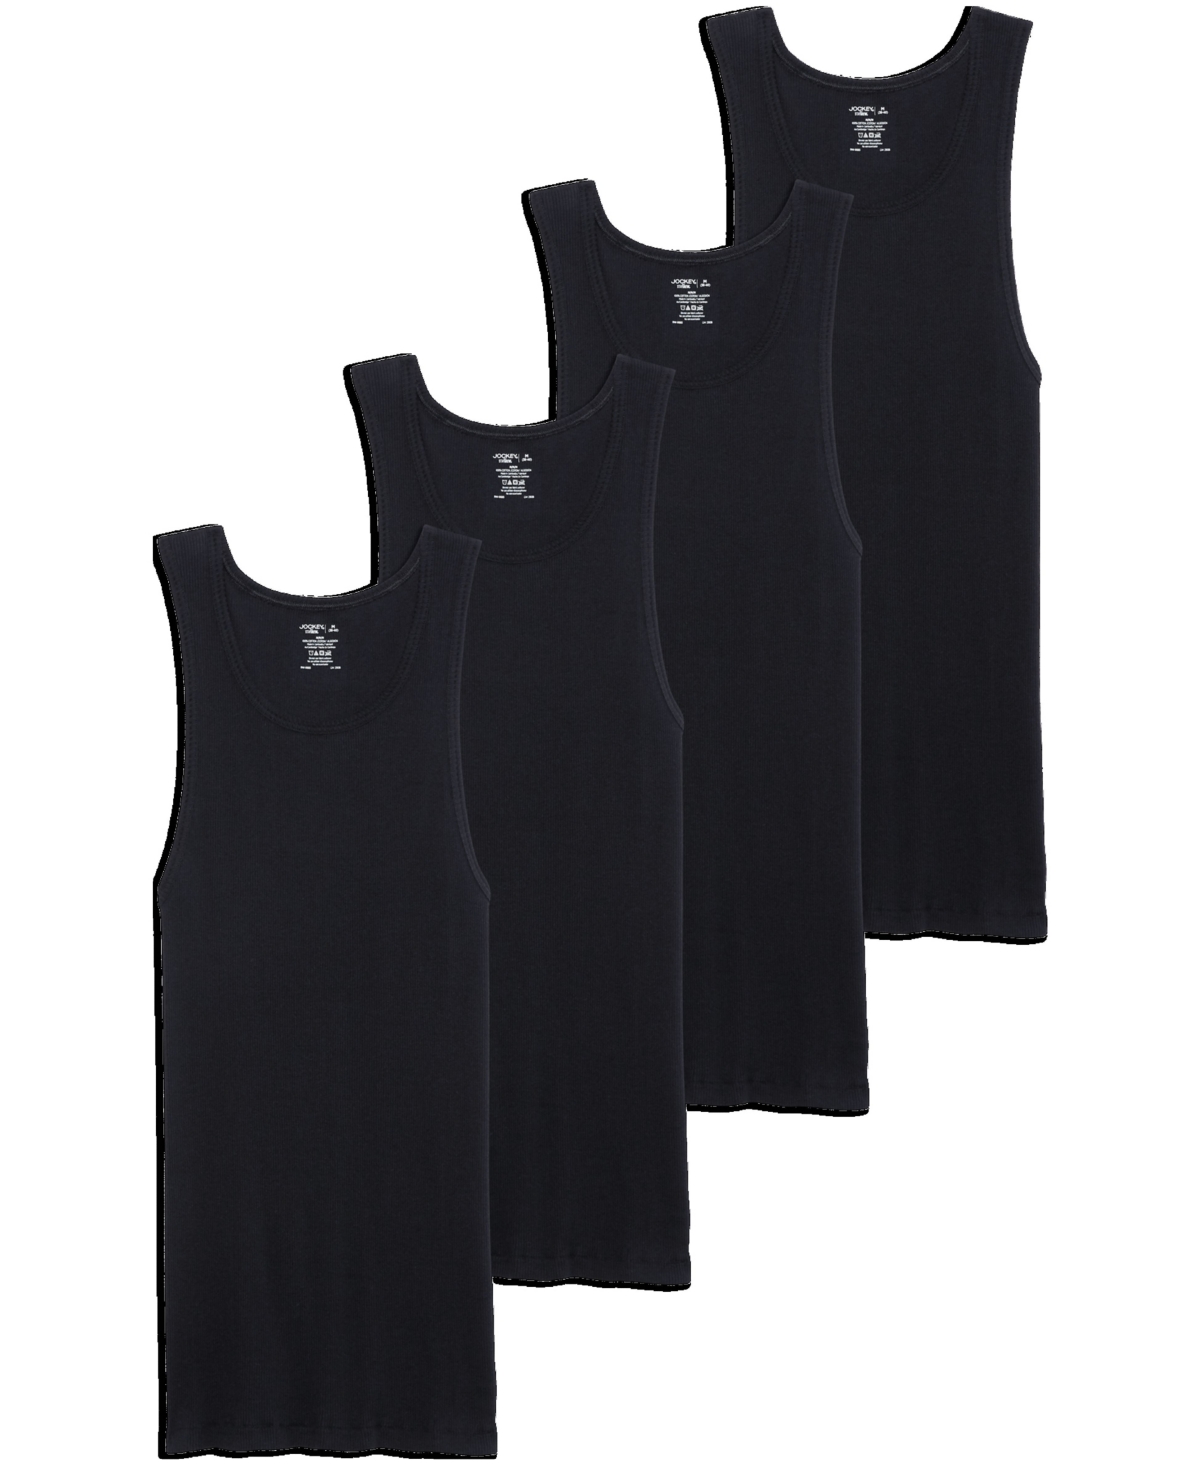 Men's Cotton A-shirt Tank Top, Pack of 4 - Black, Lantern Gray, Gray Heather, White